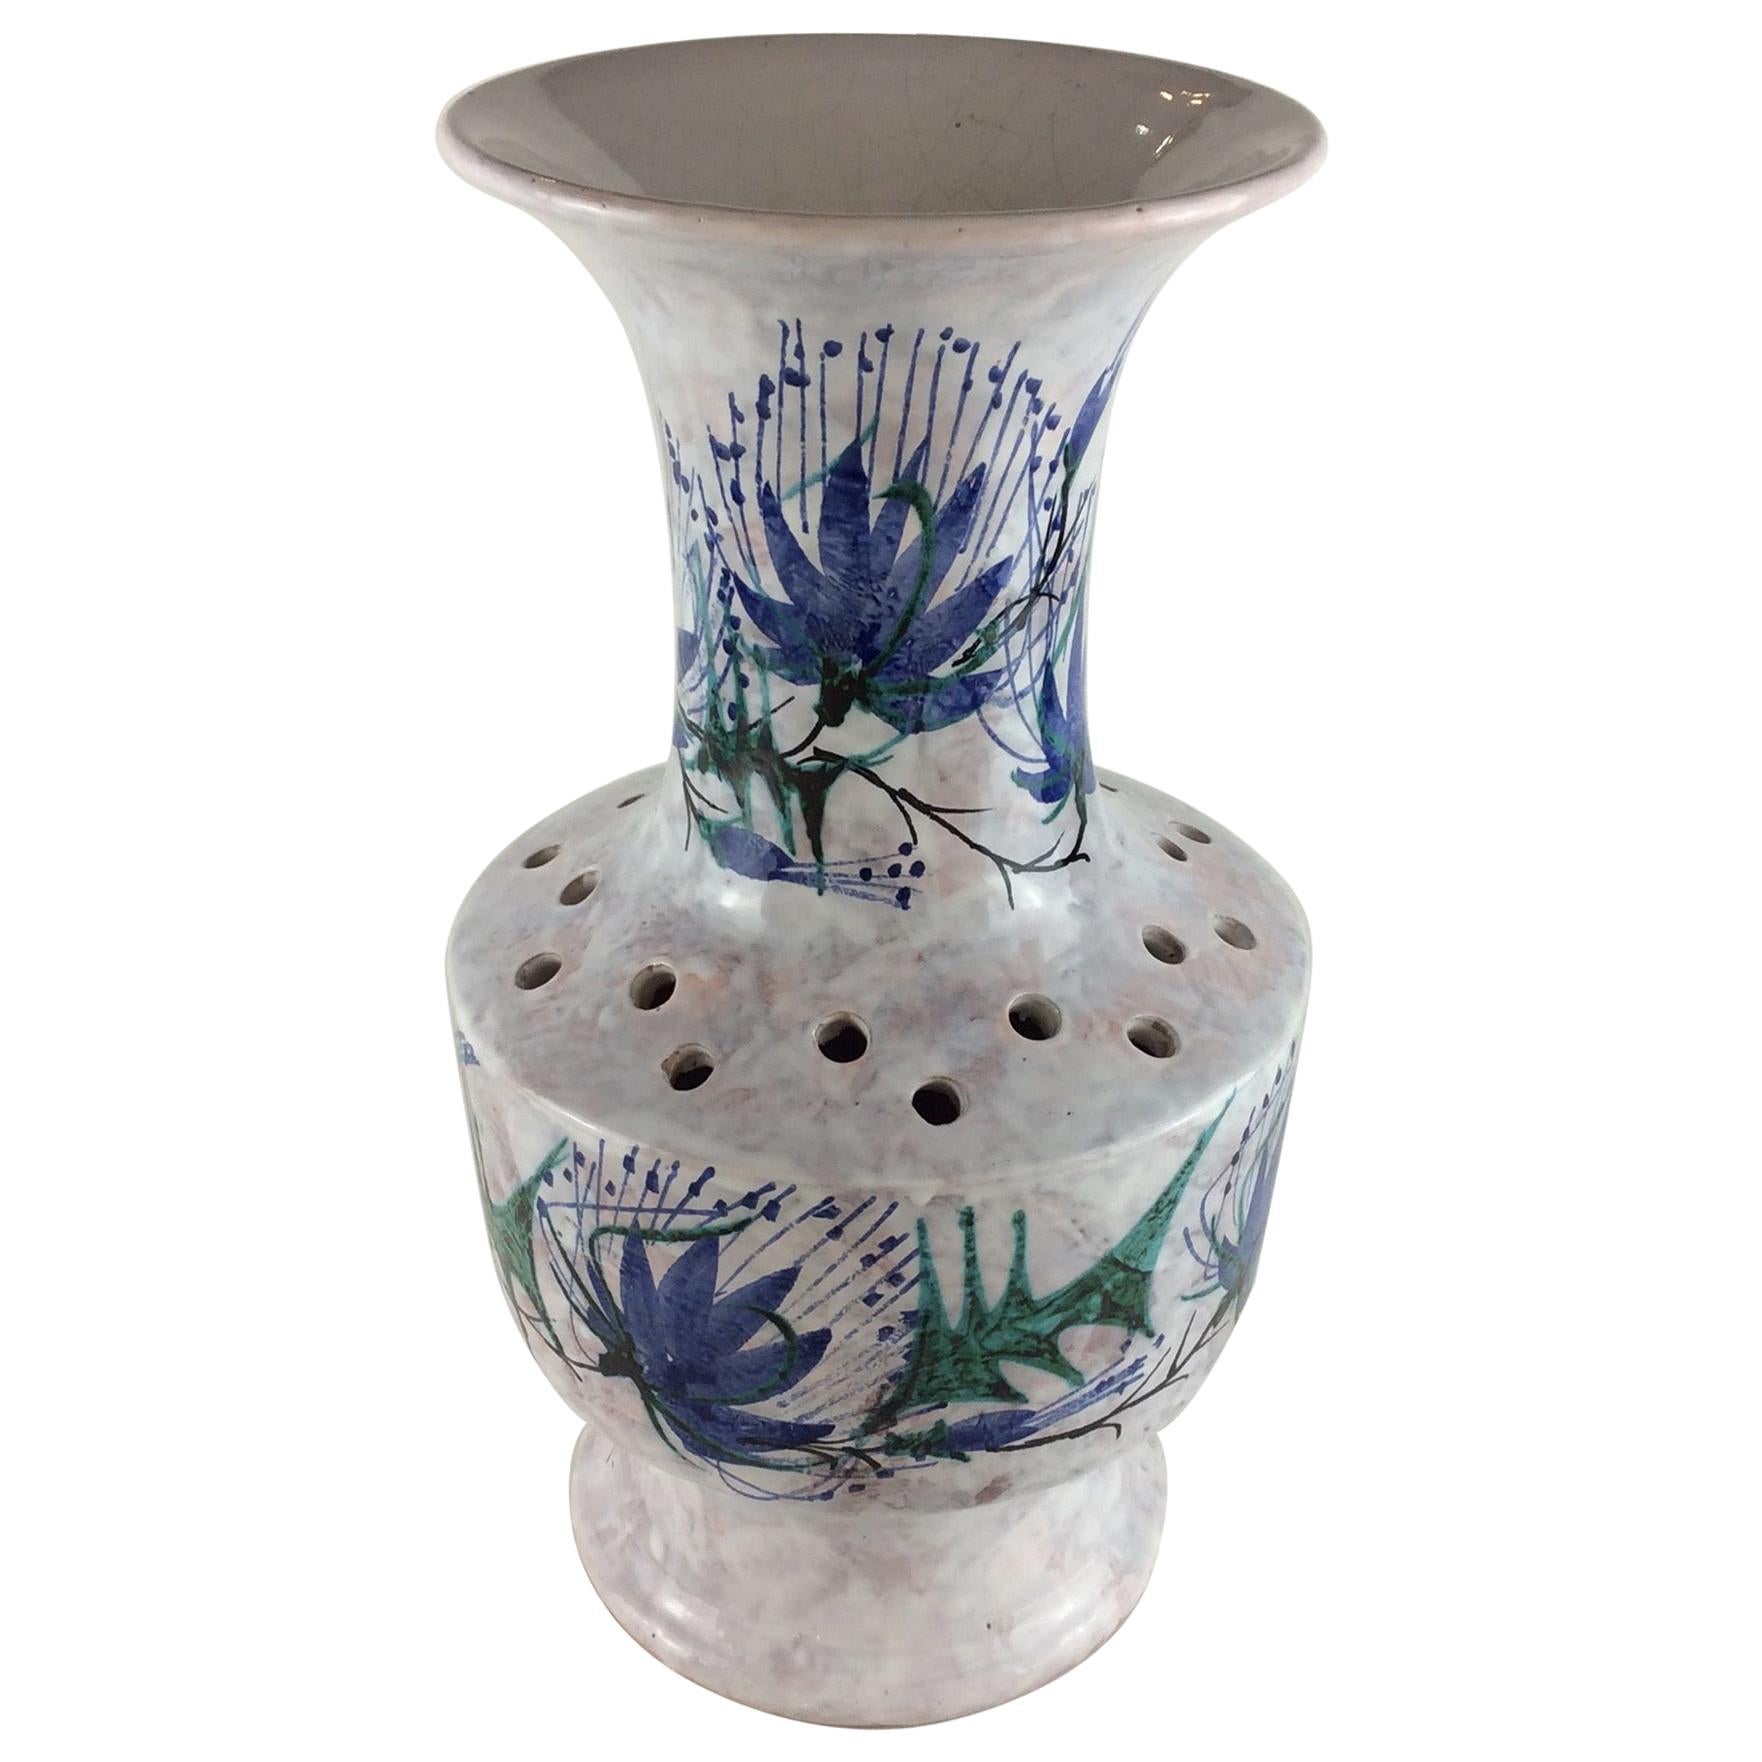 Tall Glazed Midcentury Ceramic Vase from Vallauris, France Signed Le Brescon